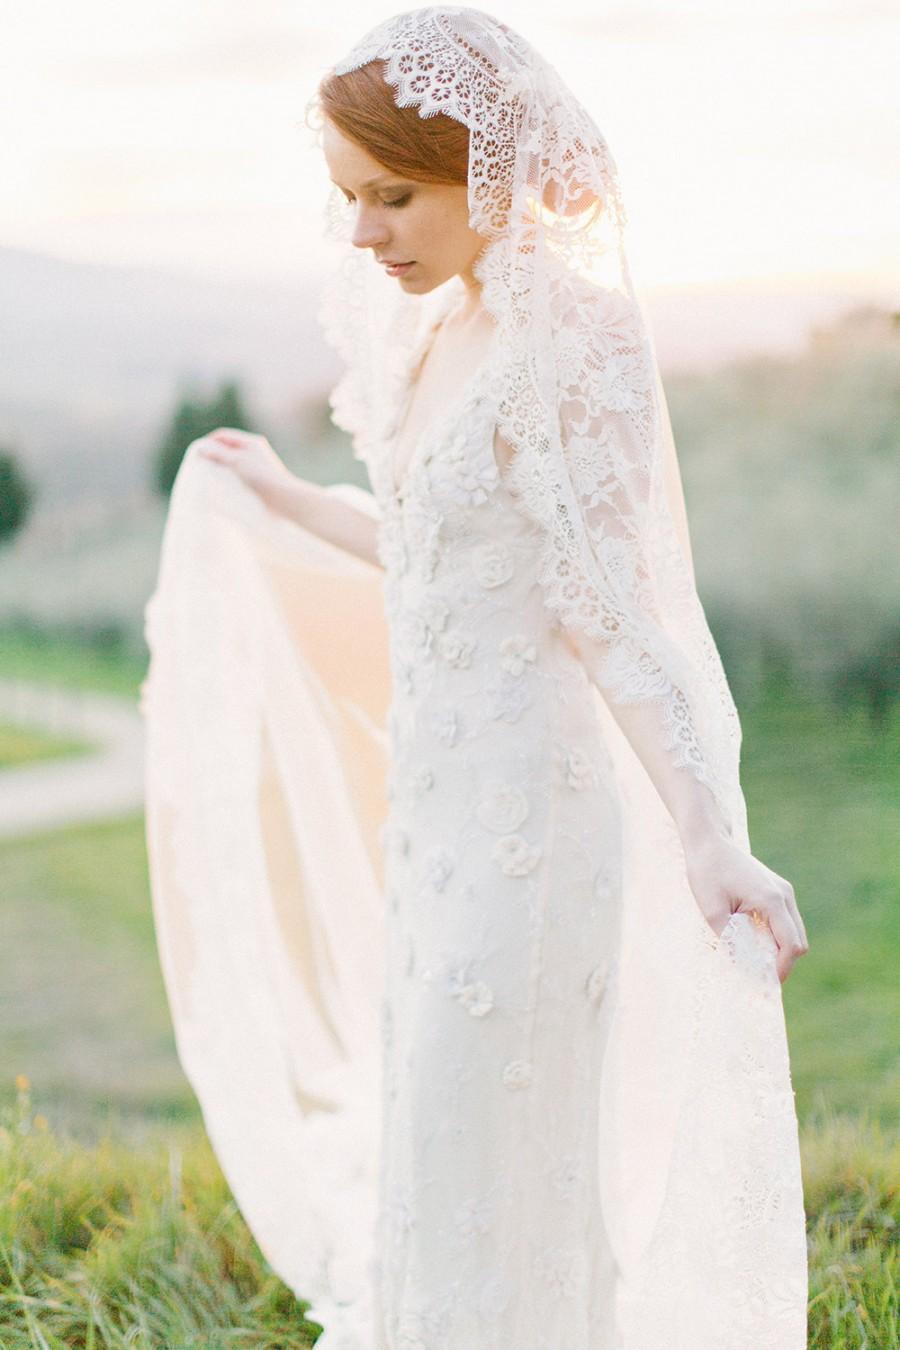 Hochzeit - Wedding Veil, Lace Bridal Mantilla veil, Ivory Cathedral length veil - Style 301